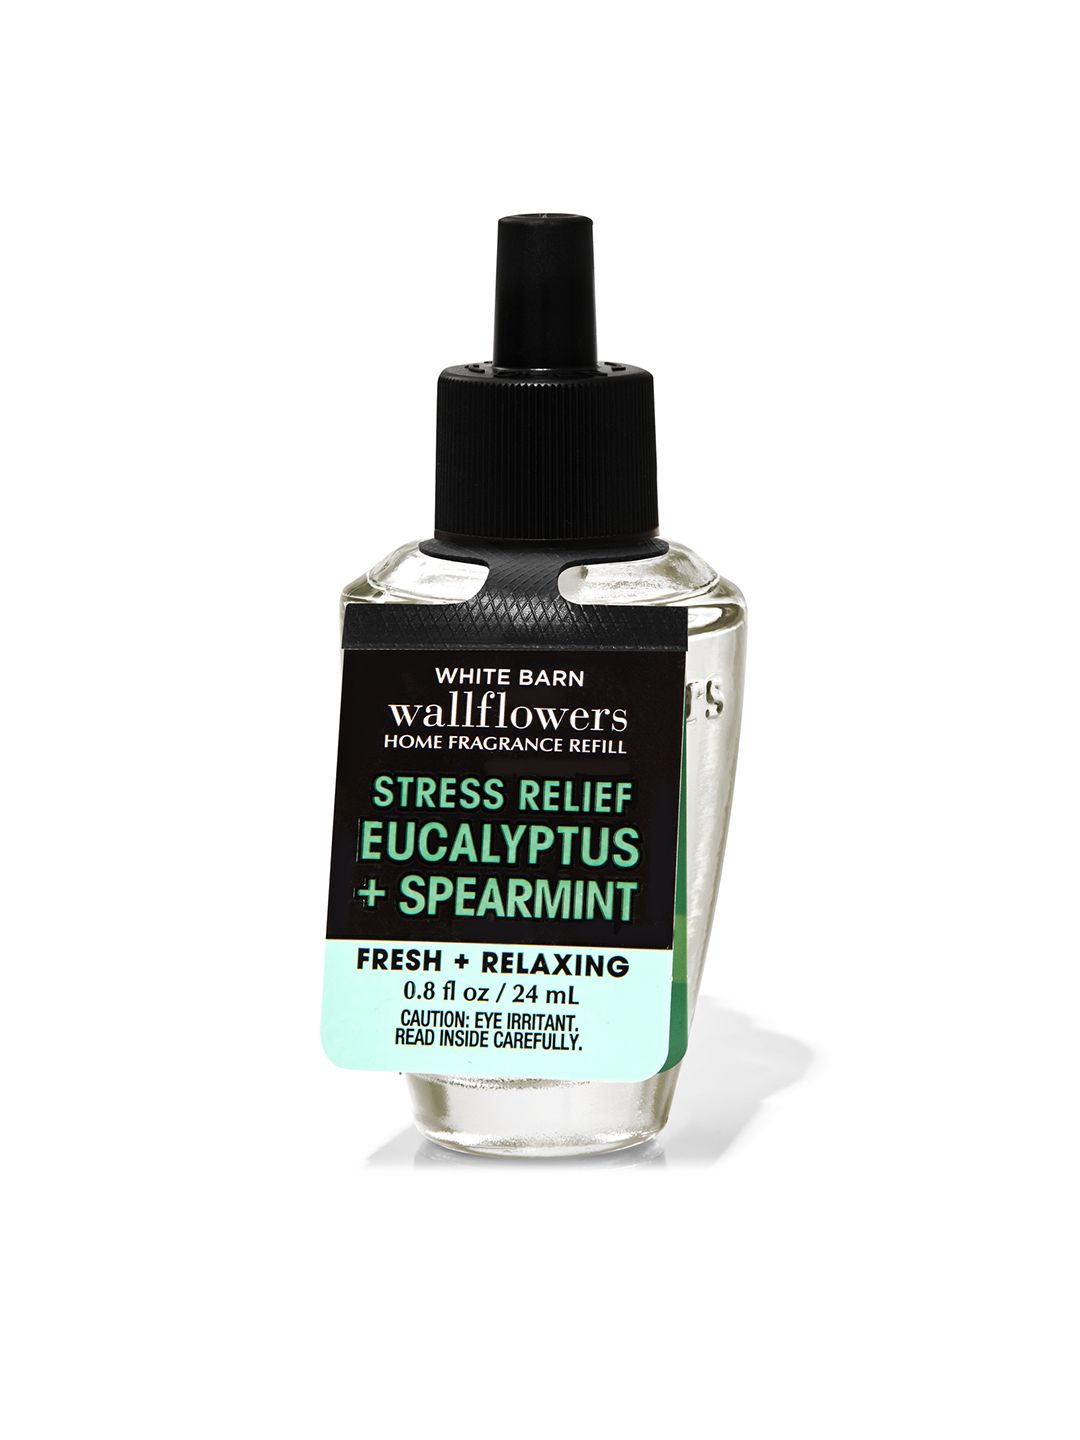 Bath & Body Works Stress Relief Eucalyptus Spearmint Wallflowers Fragrance Refill - 24 ml Price in India